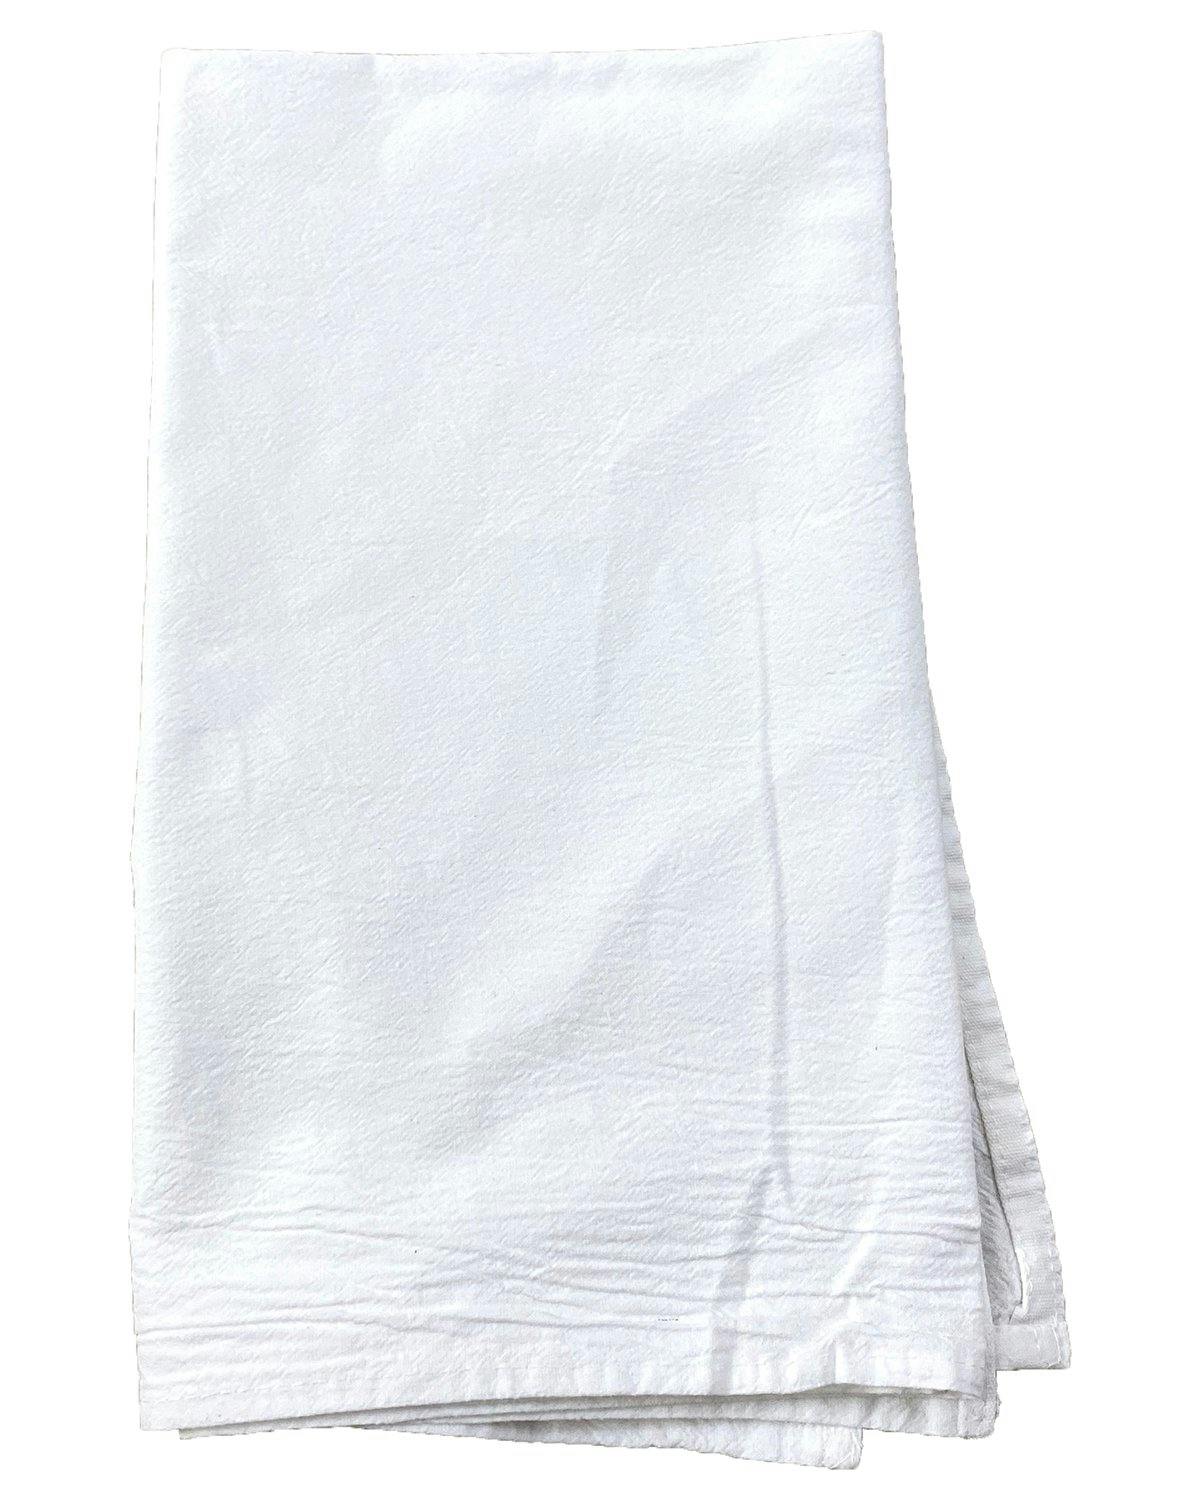 Image for Premium Flour Sack Towel